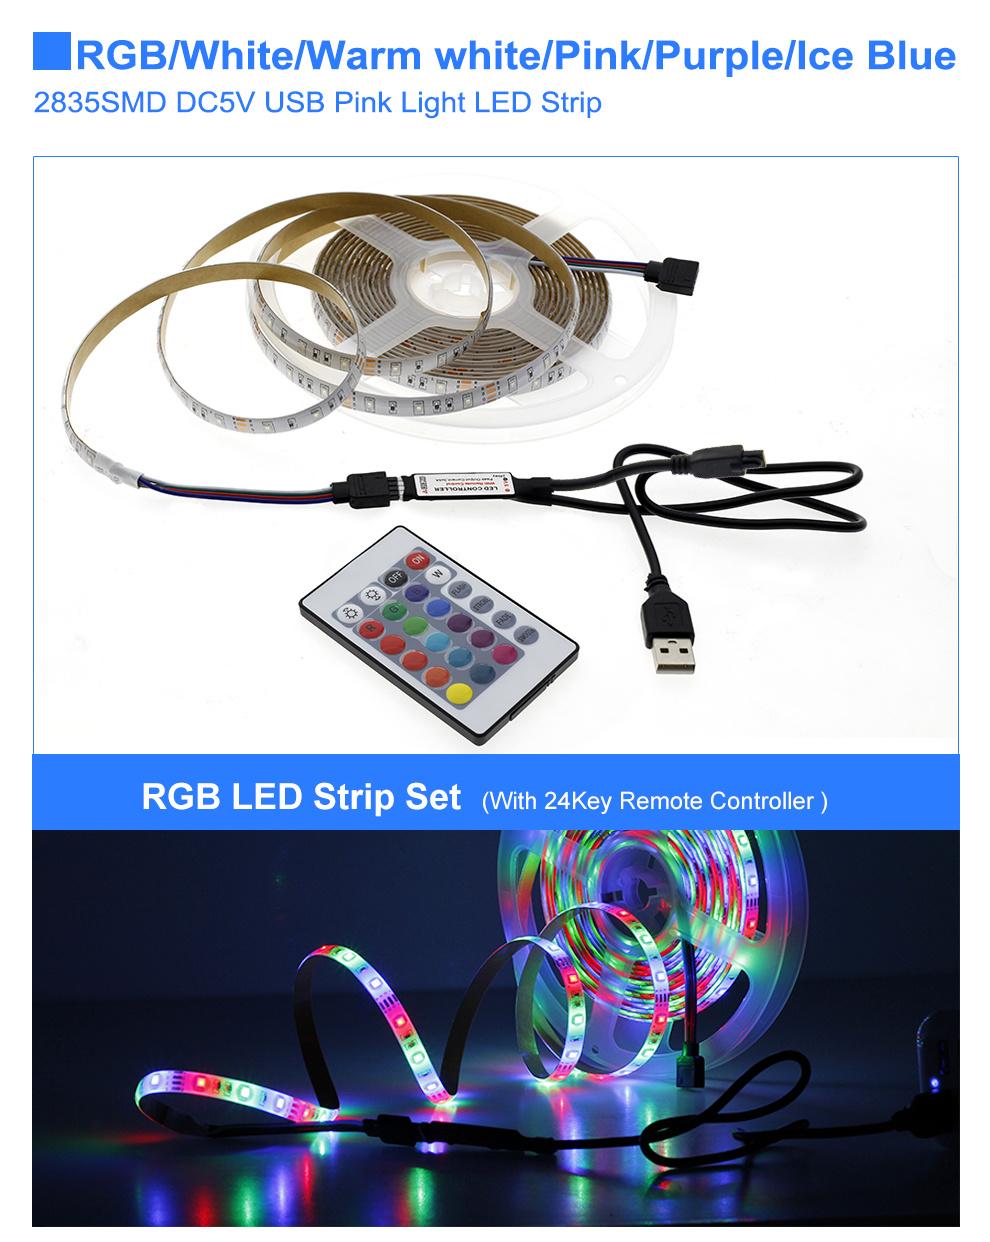 5V LED Strip Light USB 2835SMD RGB Diode Tape 0.5m 1m 2m 3m Flexible Neon Ribbon for TV Backlight PC Screen Background Lighting